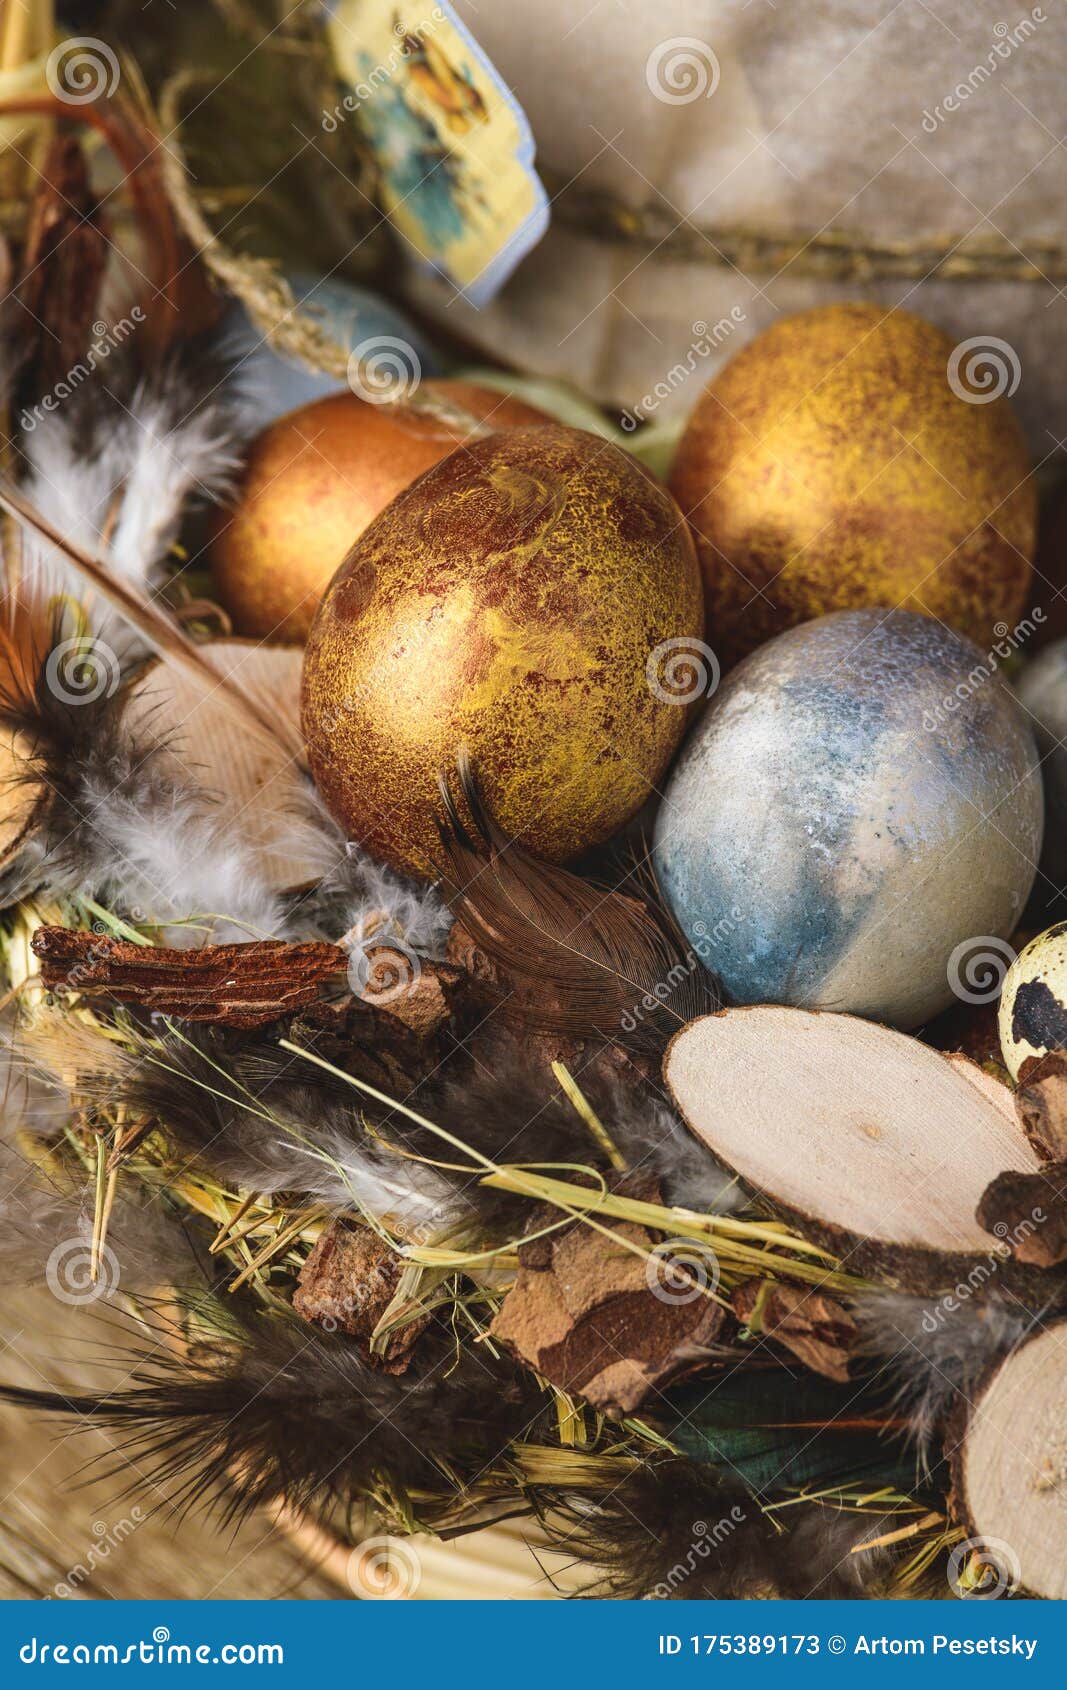 Hot Cross Buns and Easter Eggs Christmas Stock Image - Image of cake ...